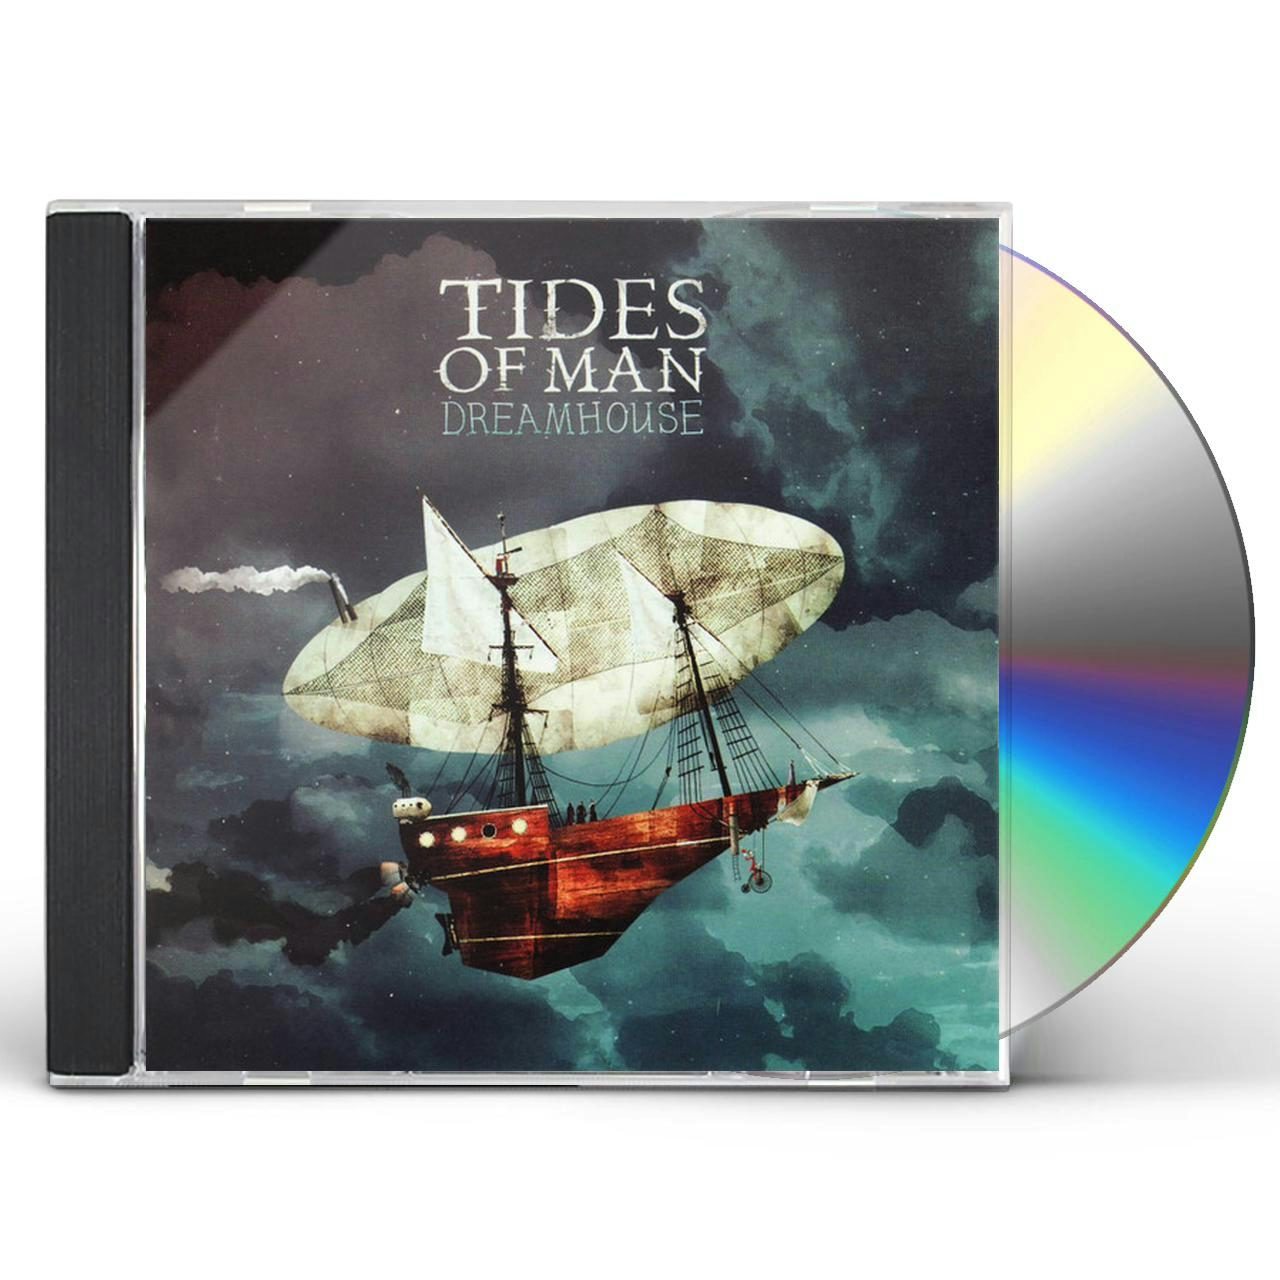 Tides Of Man DREAMHOUSE CD $16.49$14.99